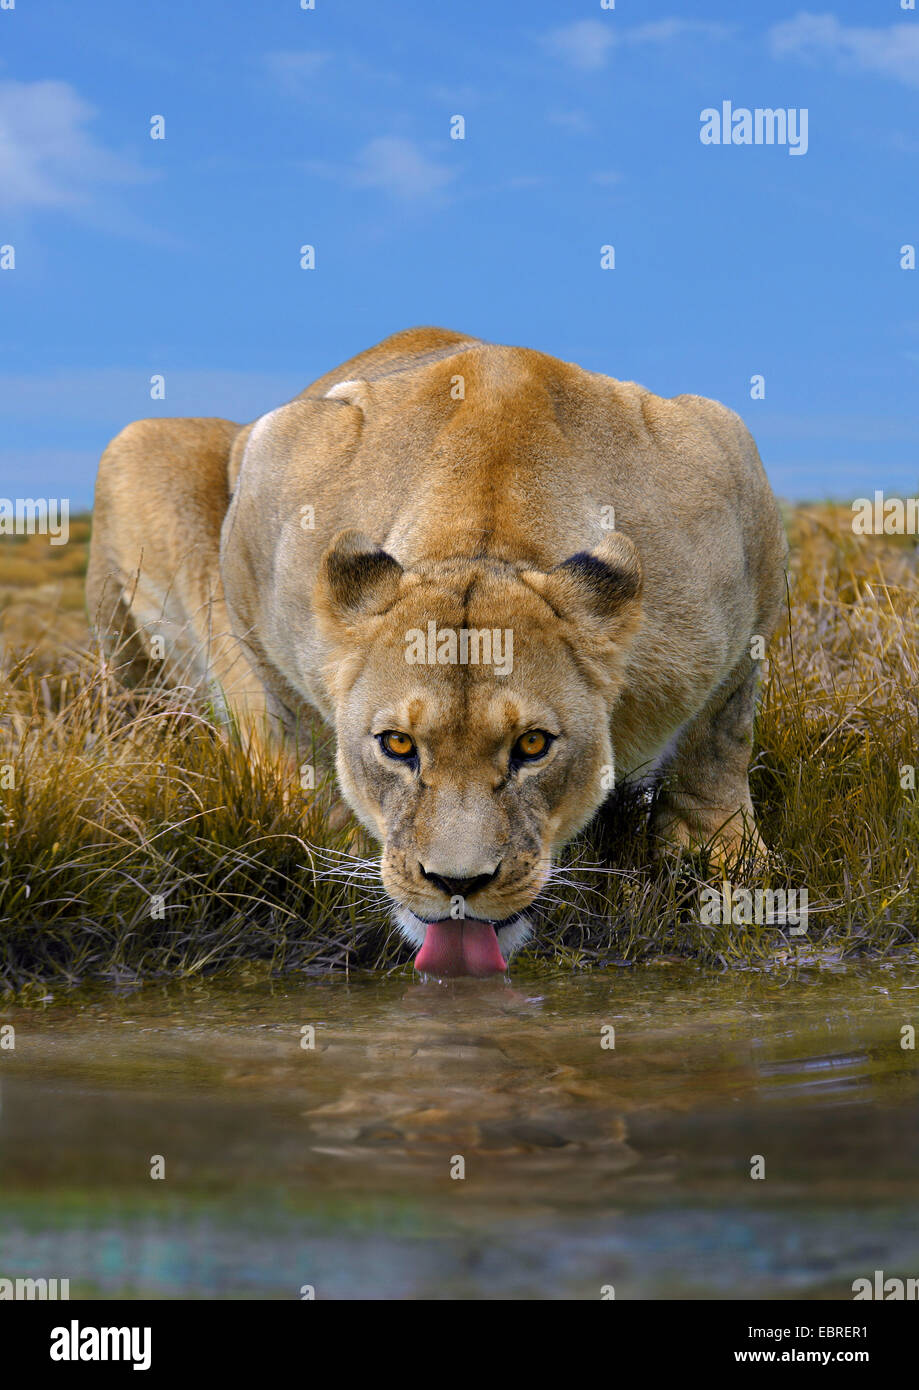 Lion (Panthera leo), bere leonessa, Tanzania Serengeti National Park Foto Stock